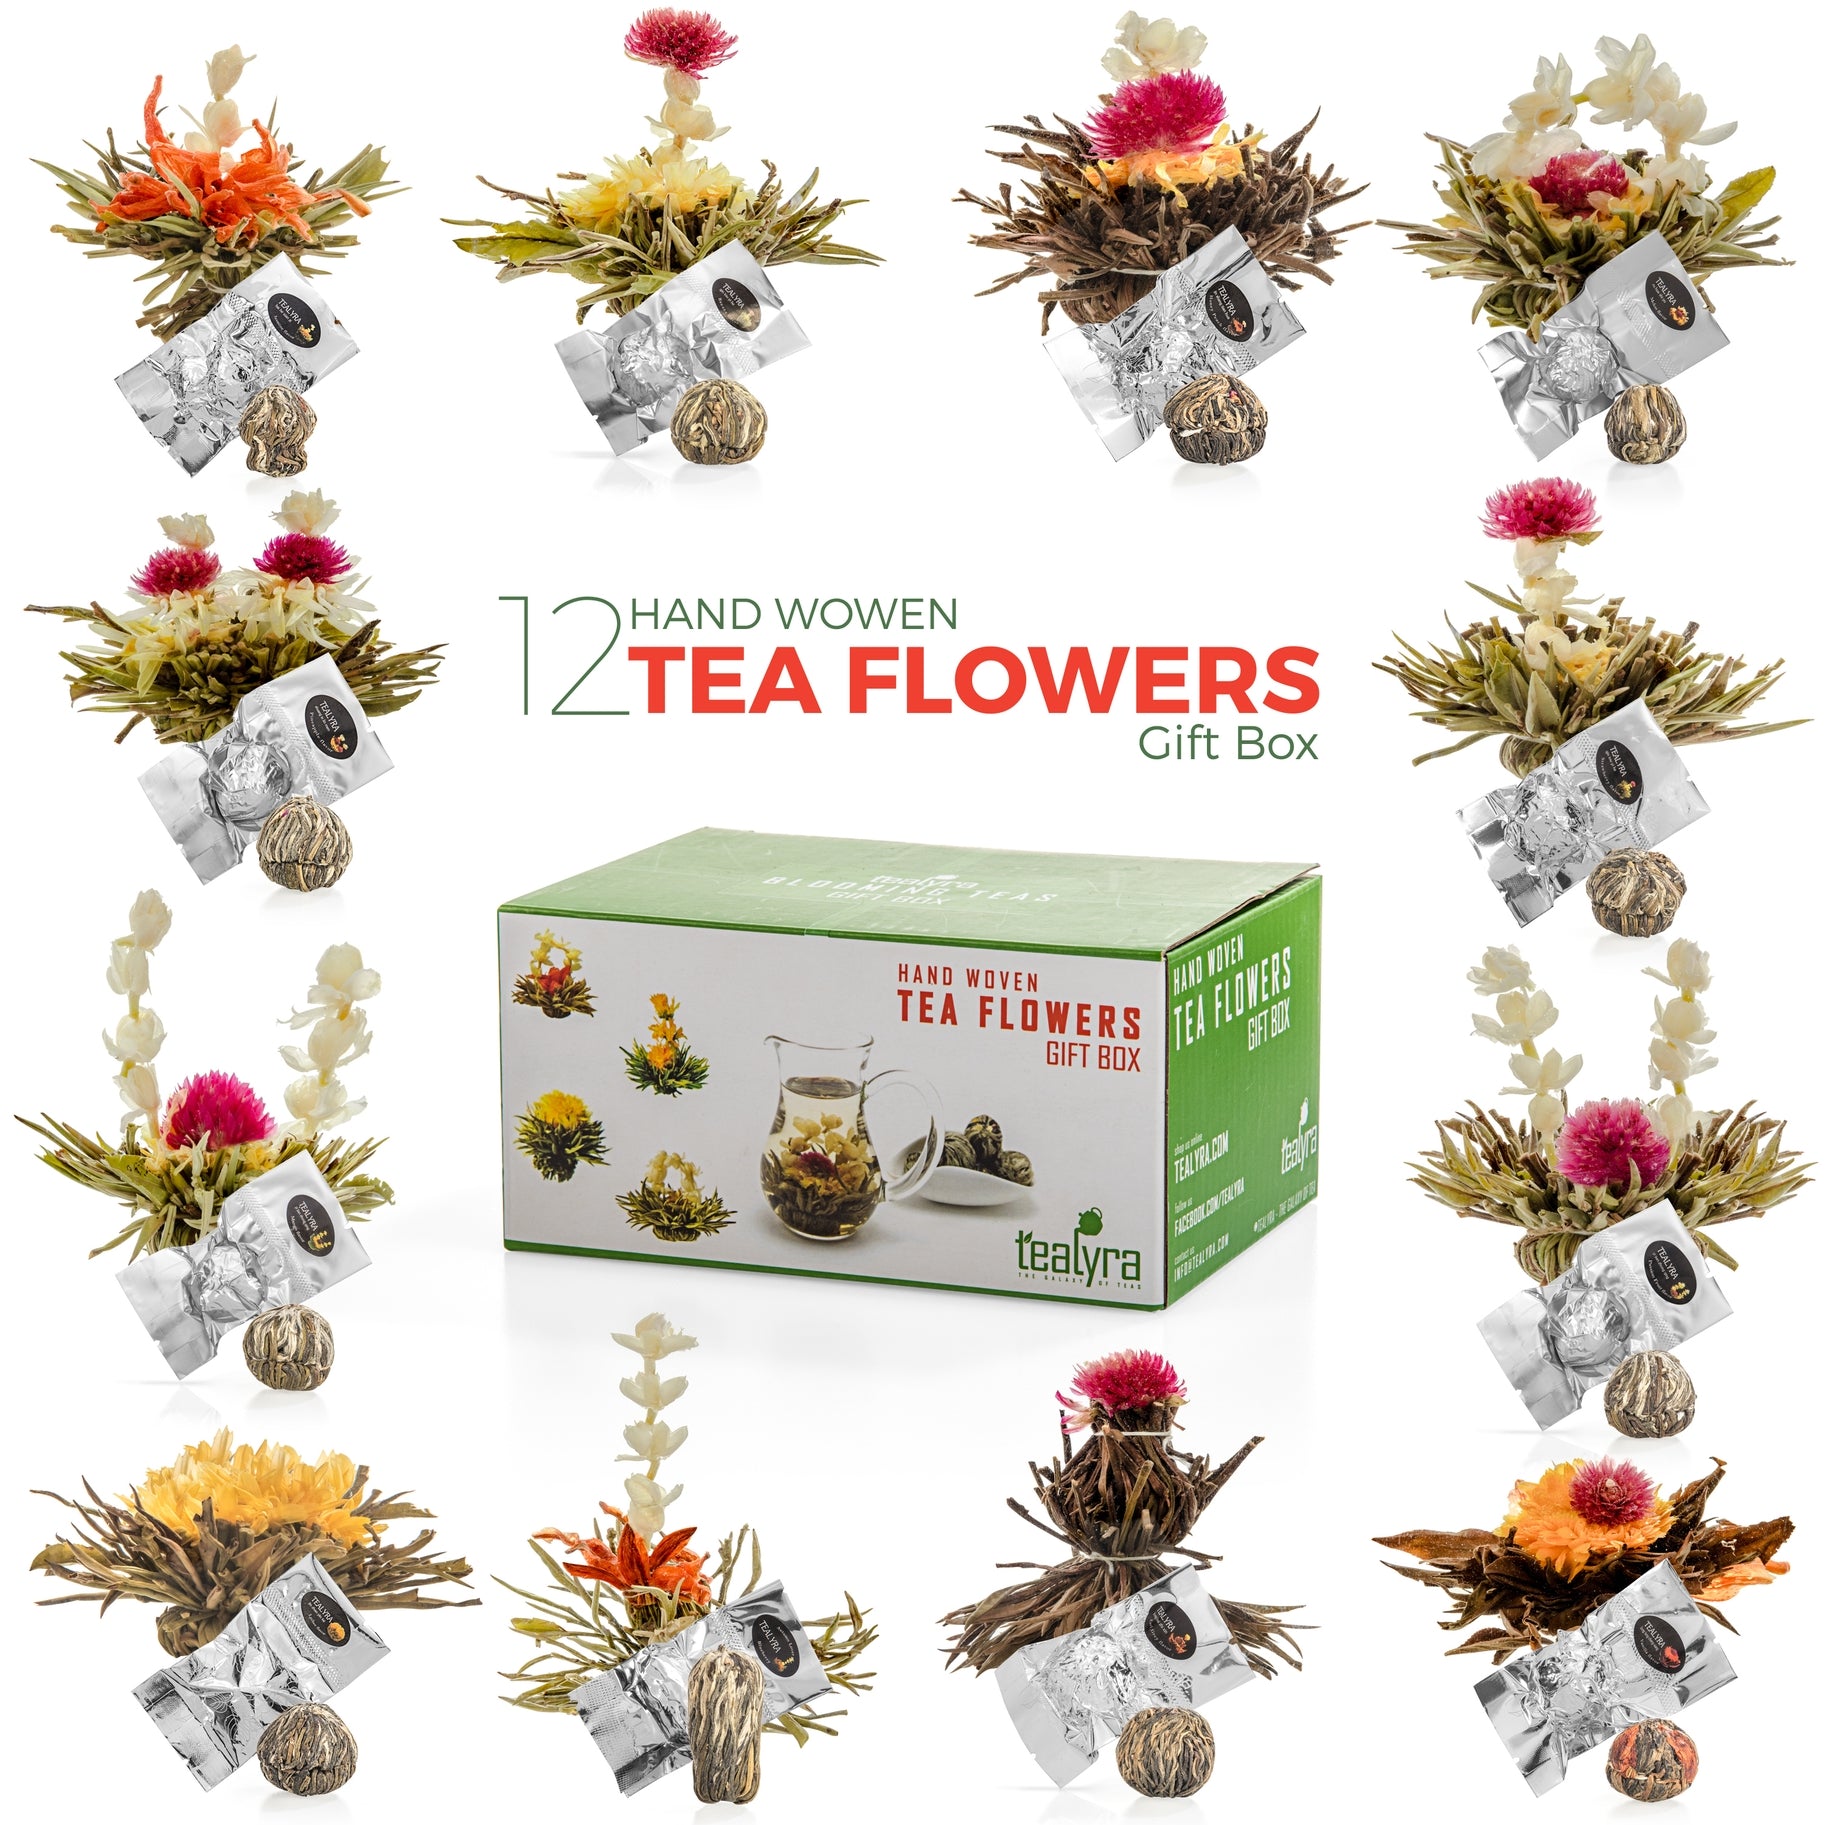 Blooming Tea - individuals